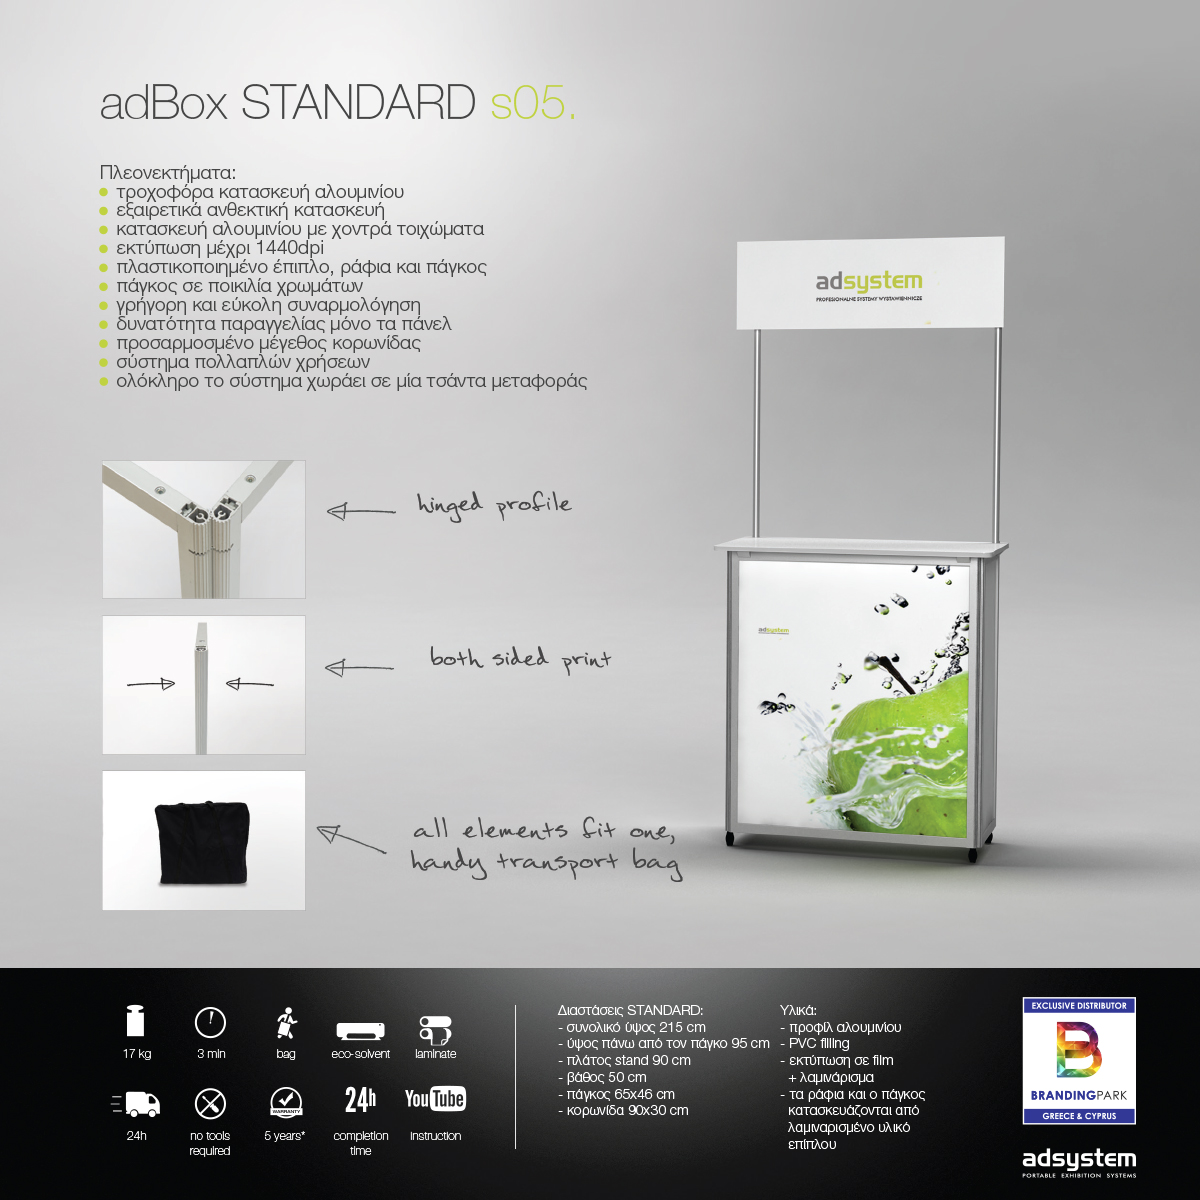 Promo stand adBox STANDARD s05.